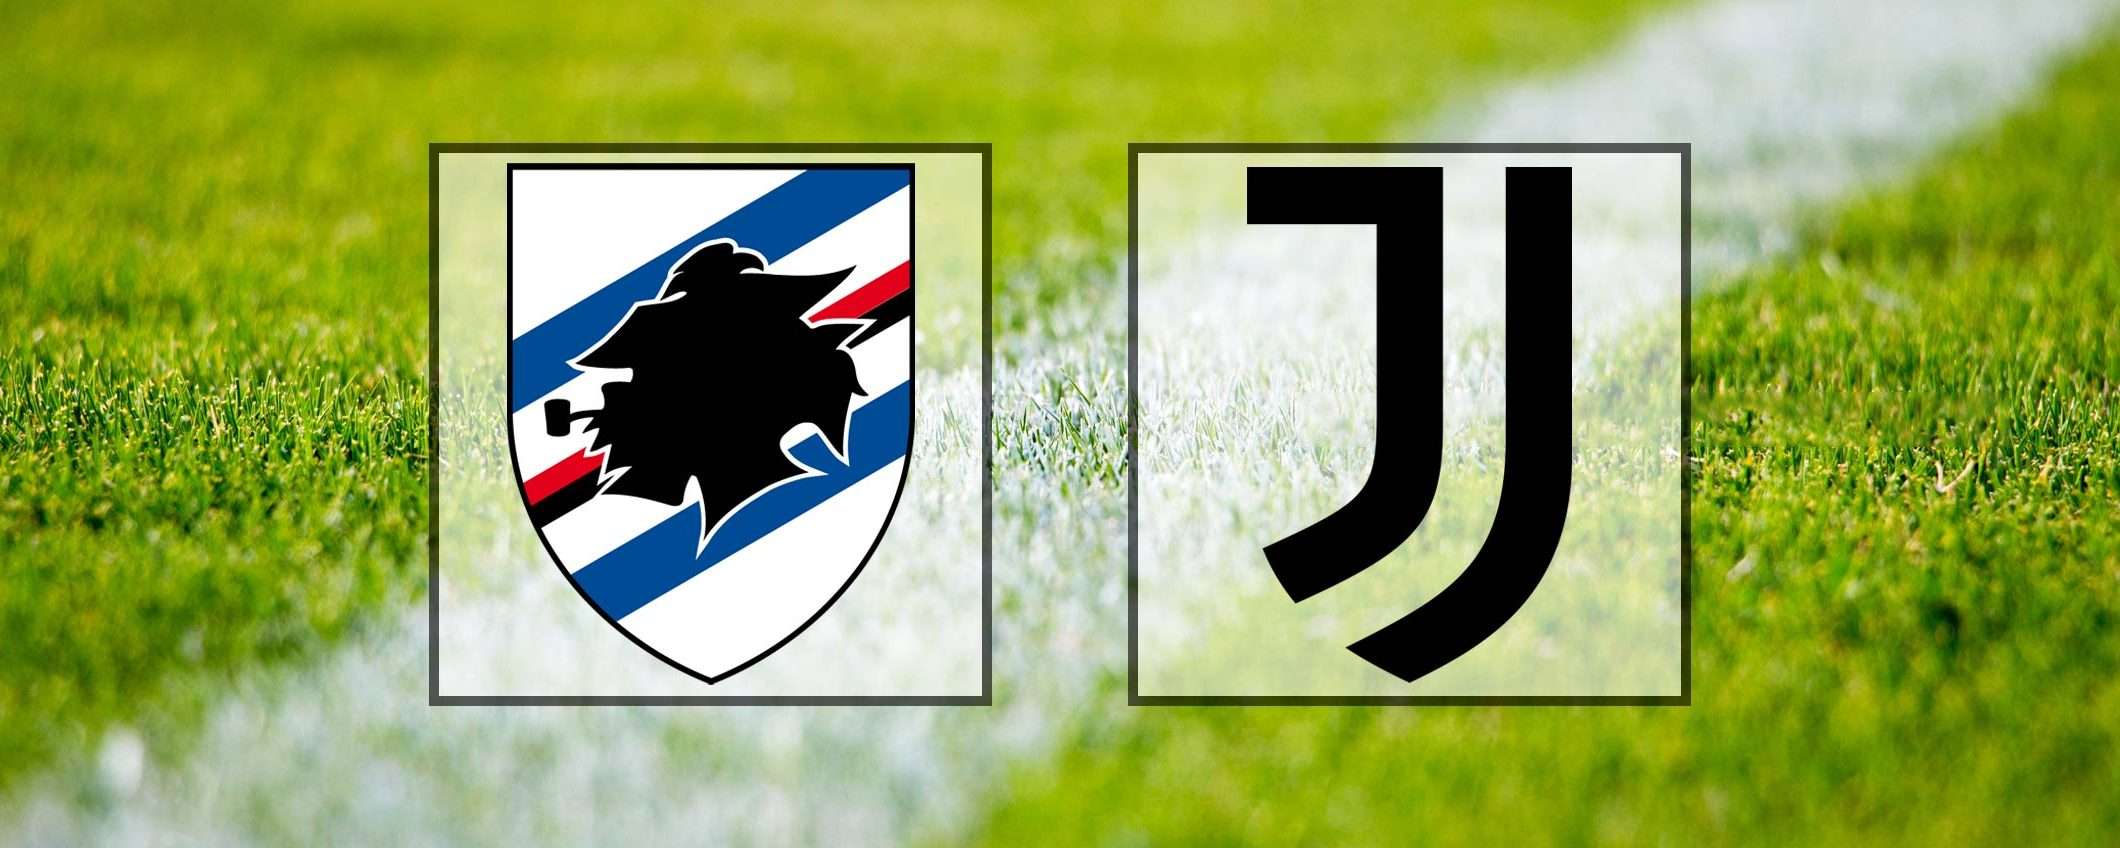 Sampdoria-Juventus (Serie A): guardala in streaming